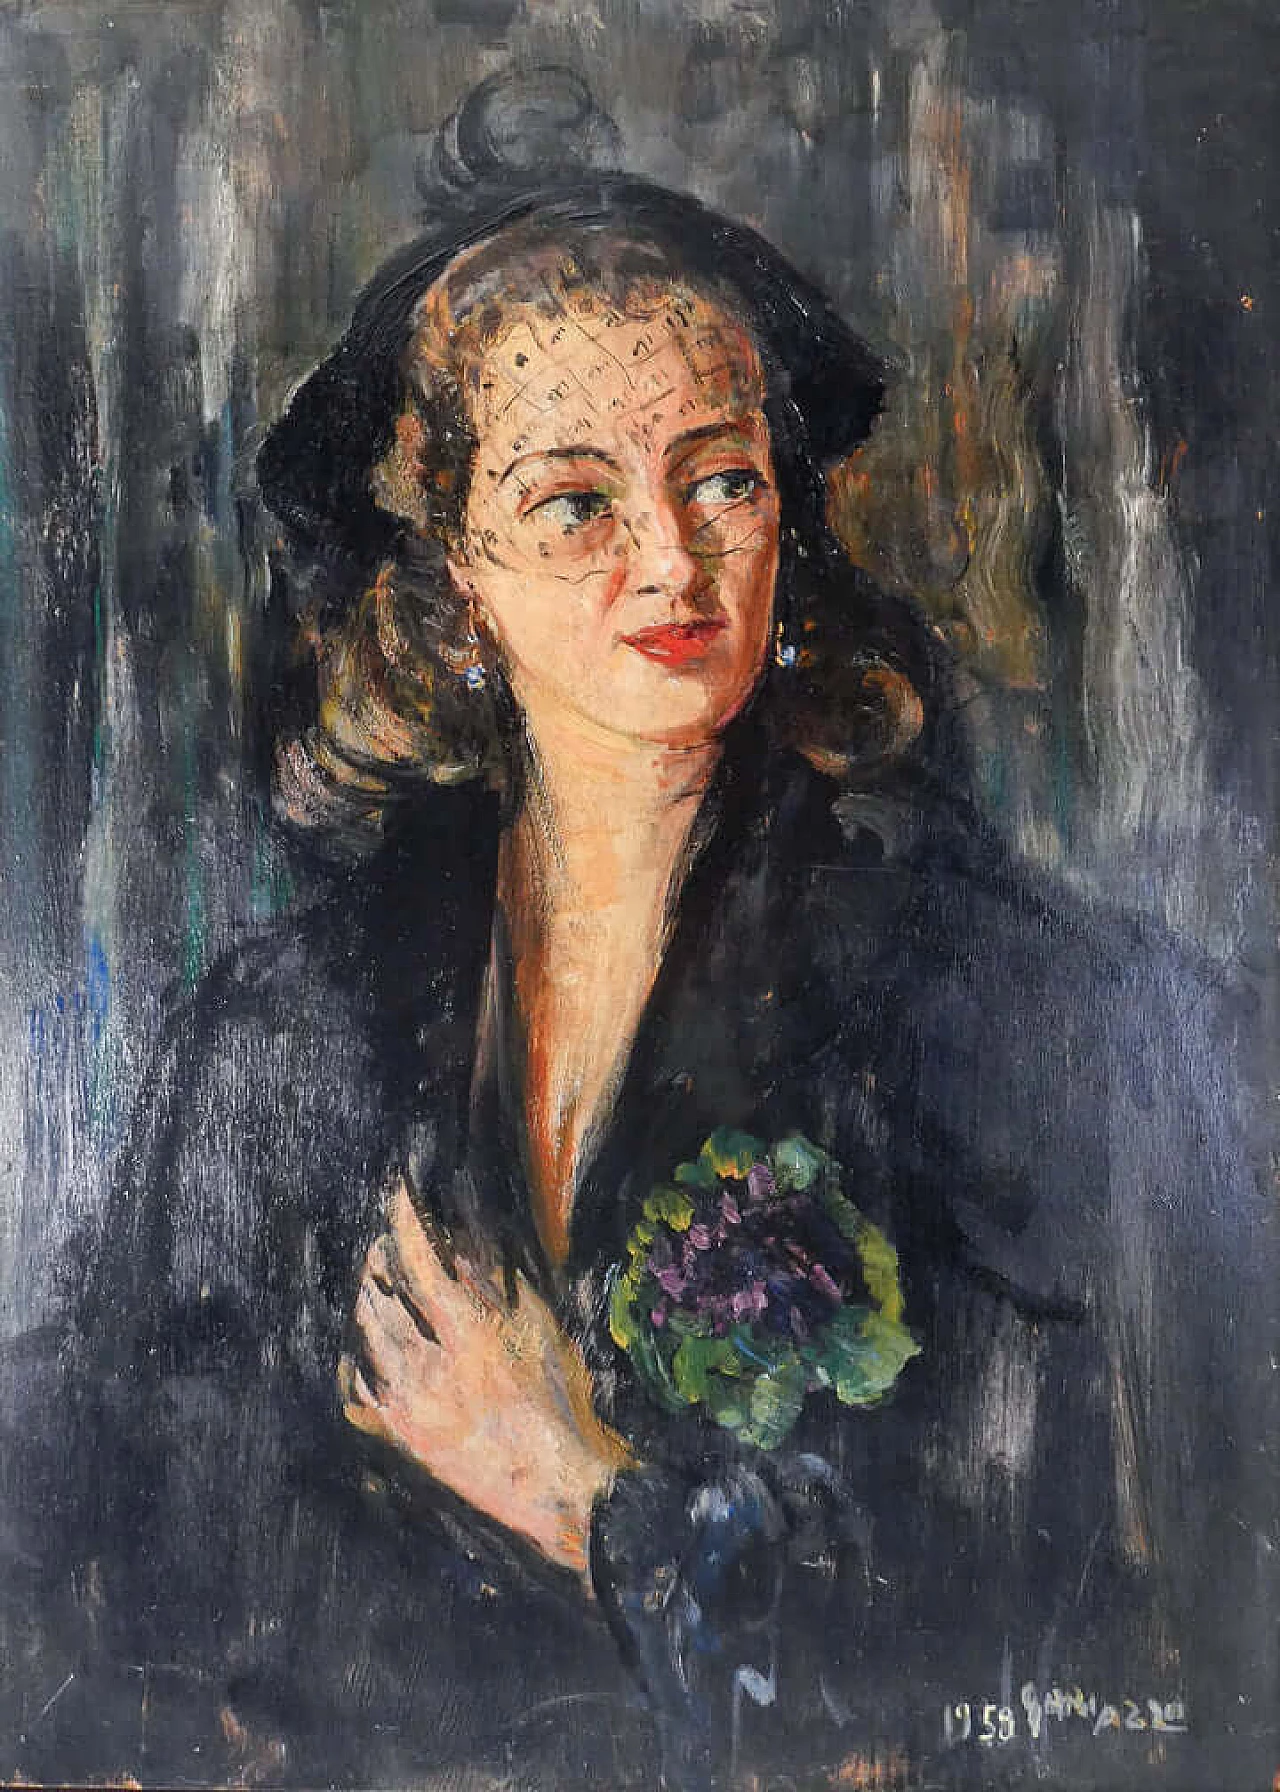 Pier Antonio Gariazzo, Portrait of Mrs. Rito, oil painting on panel, 1958 2